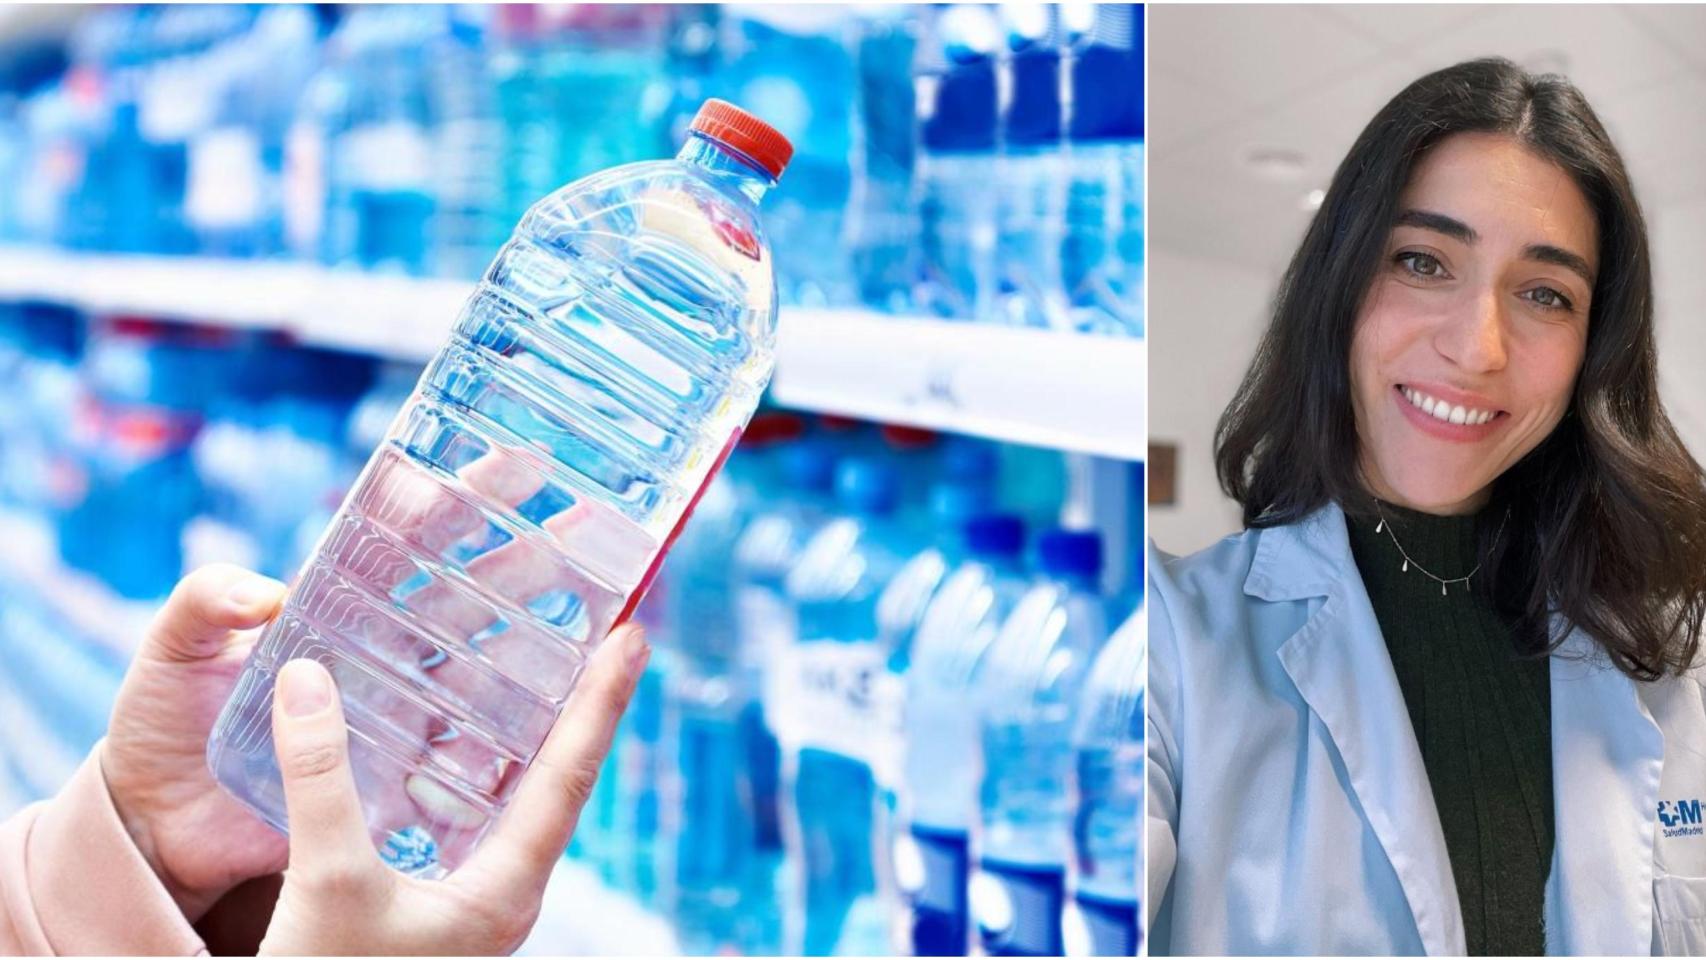 La uróloga Cristina Barrera junto a una botella de agua del 'súper'.